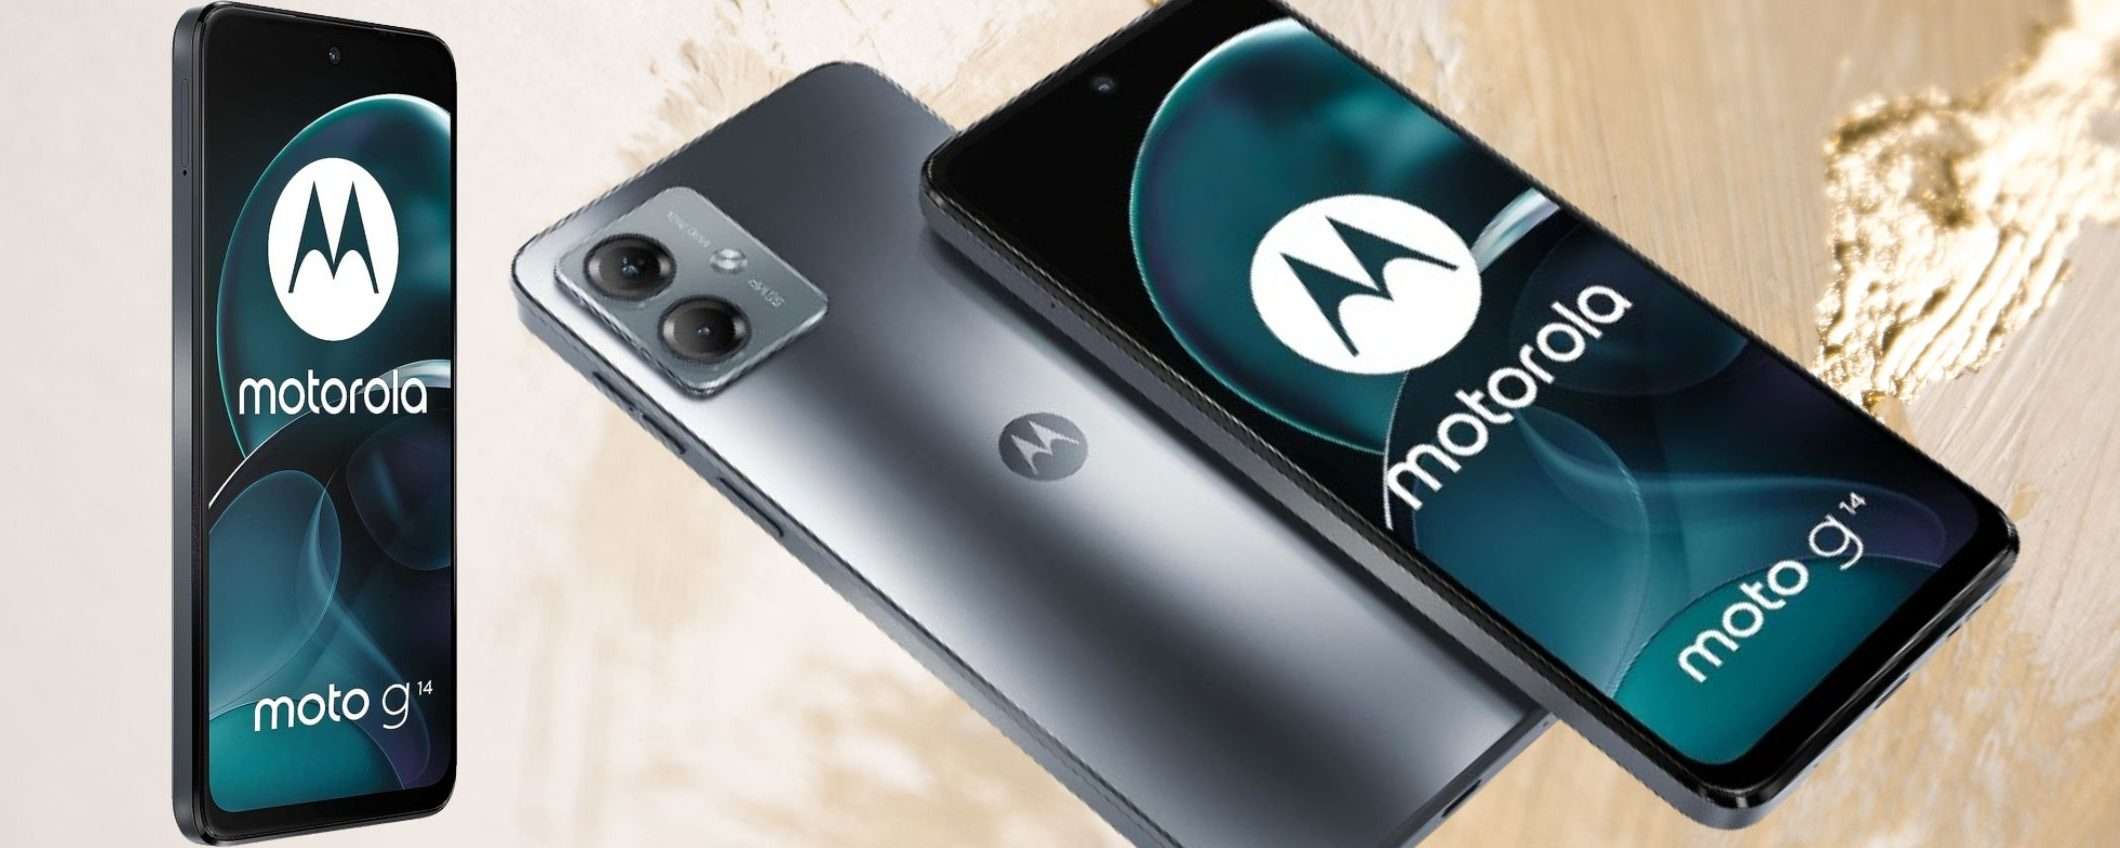 Motorola moto g14 a 89€ SPIAZZA TUTTI: 50MP, 5000 mAh, design premium (-40%)